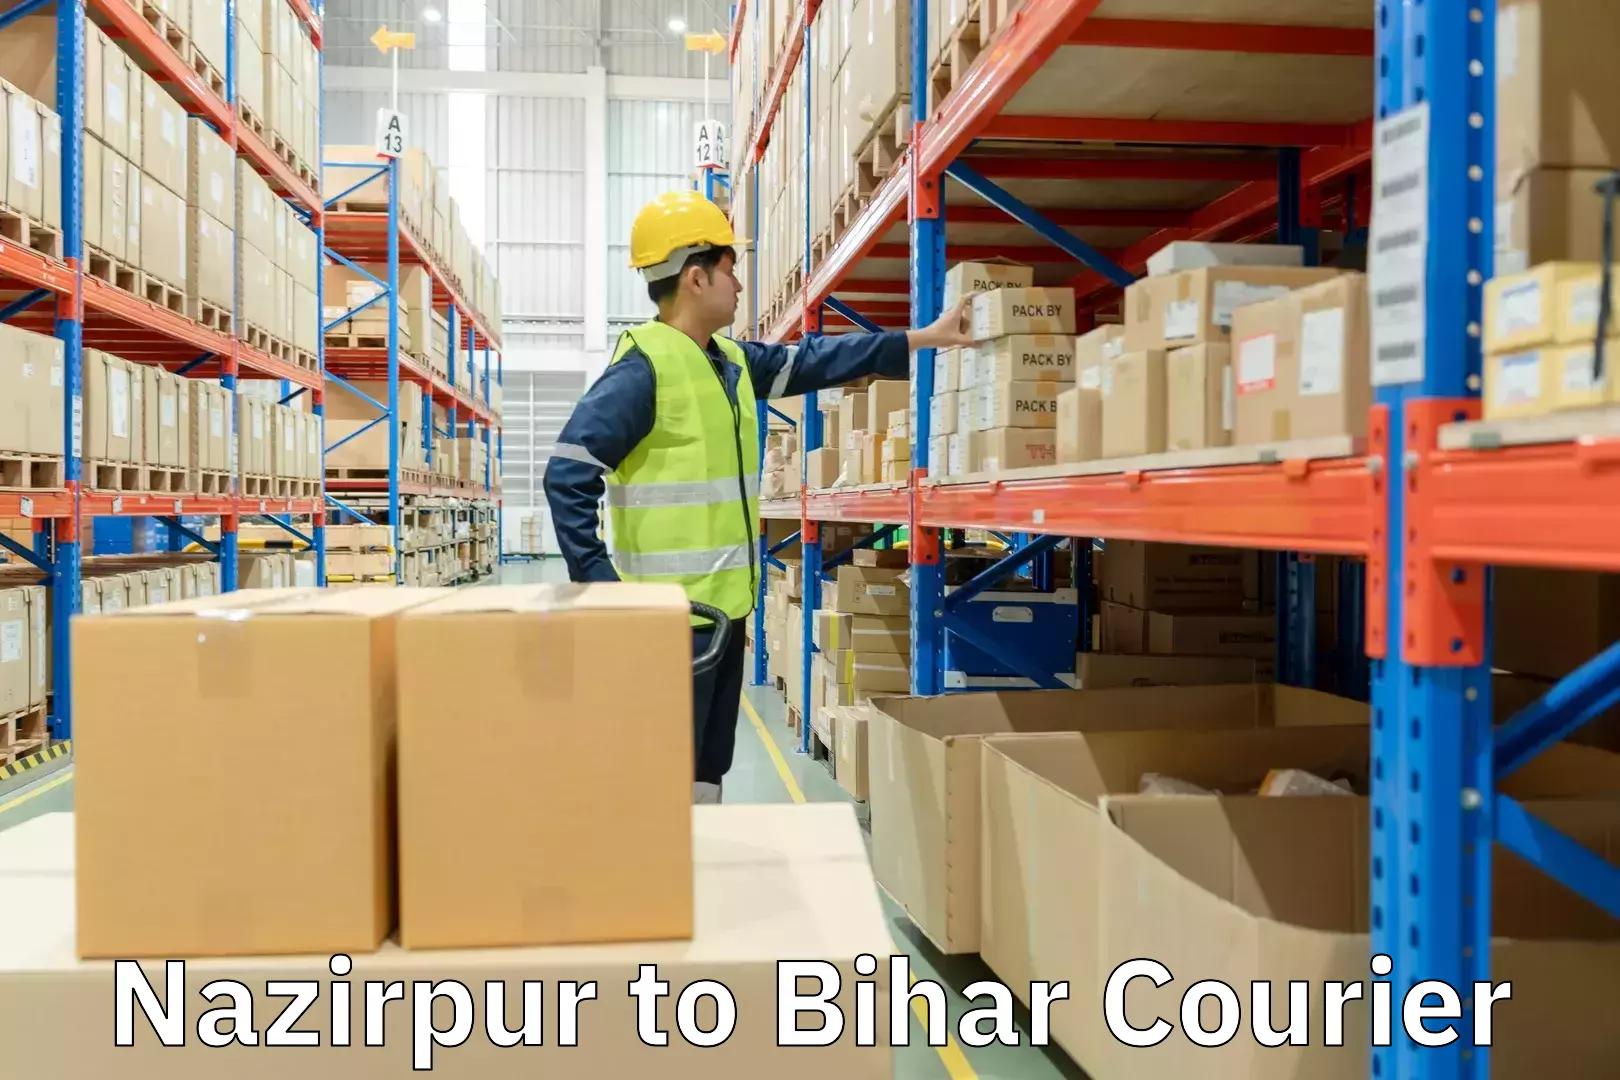 Courier service efficiency Nazirpur to Bihar